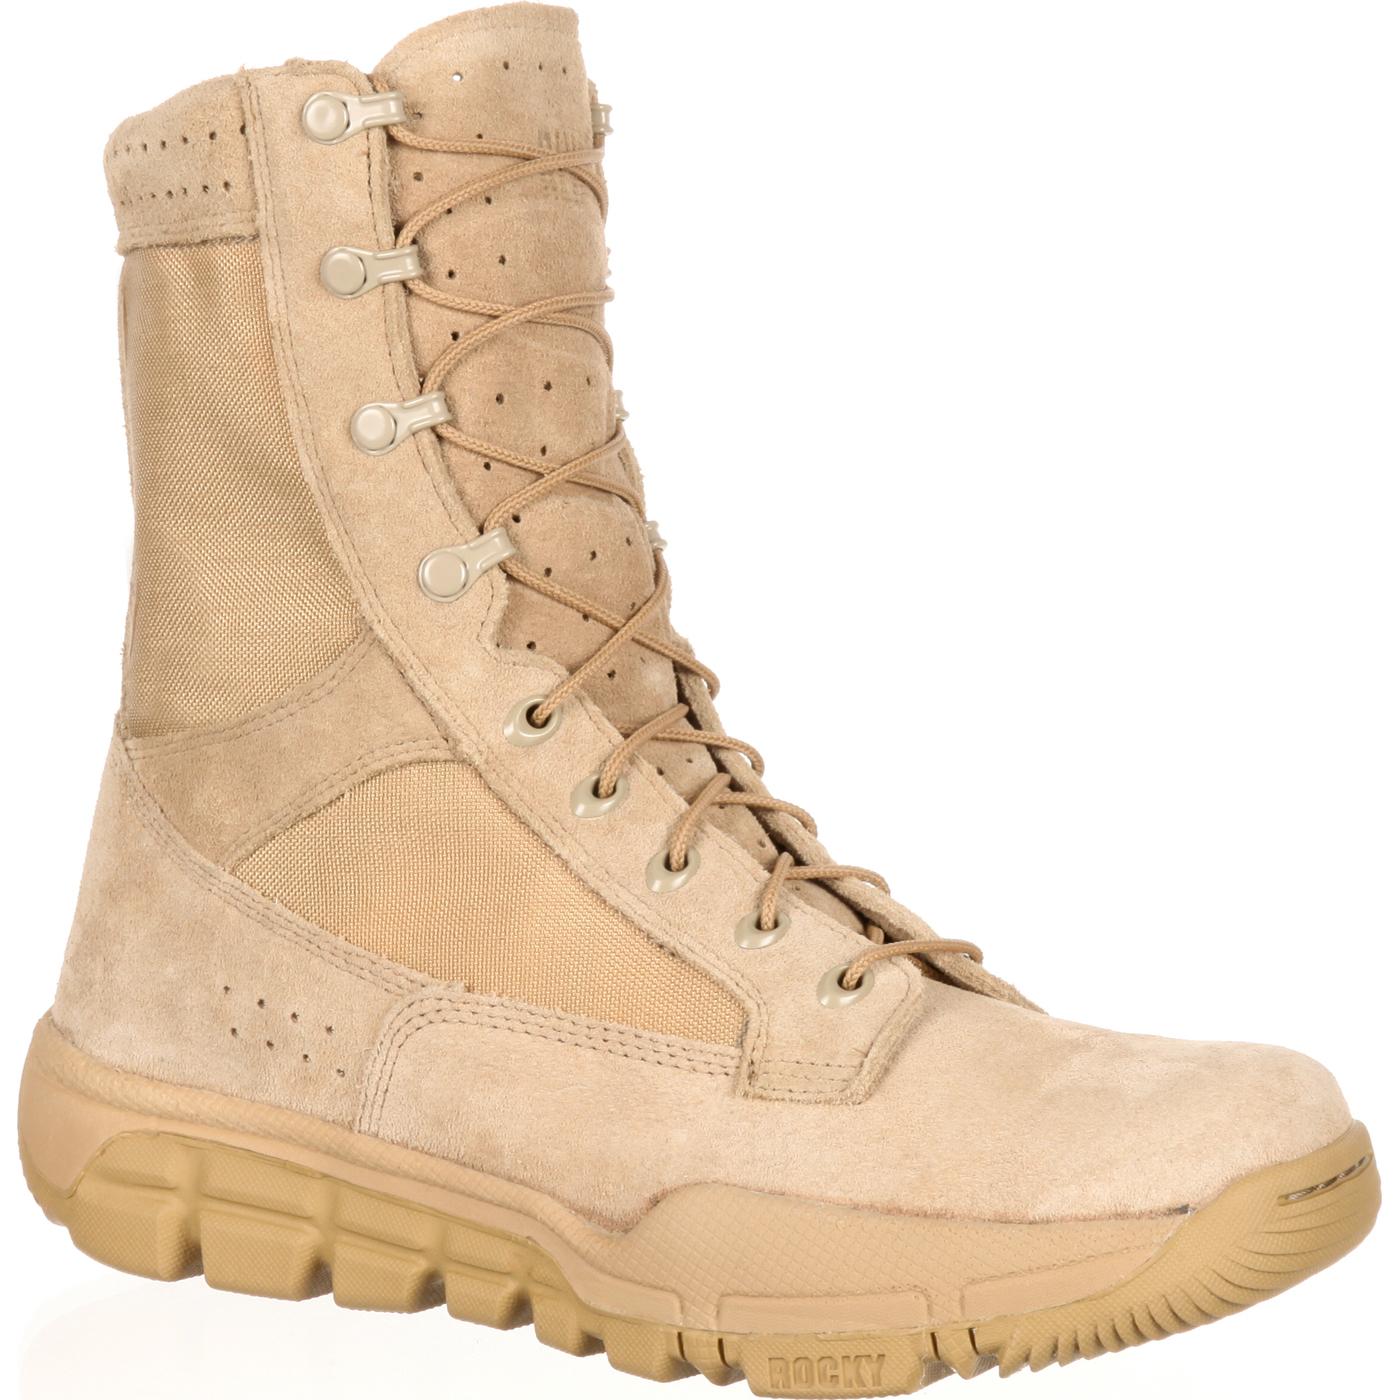 Rocky Desert Tan Lightweight Commercial Military Boot | Order Light Tan Combat Boots Online - Rocky Boots